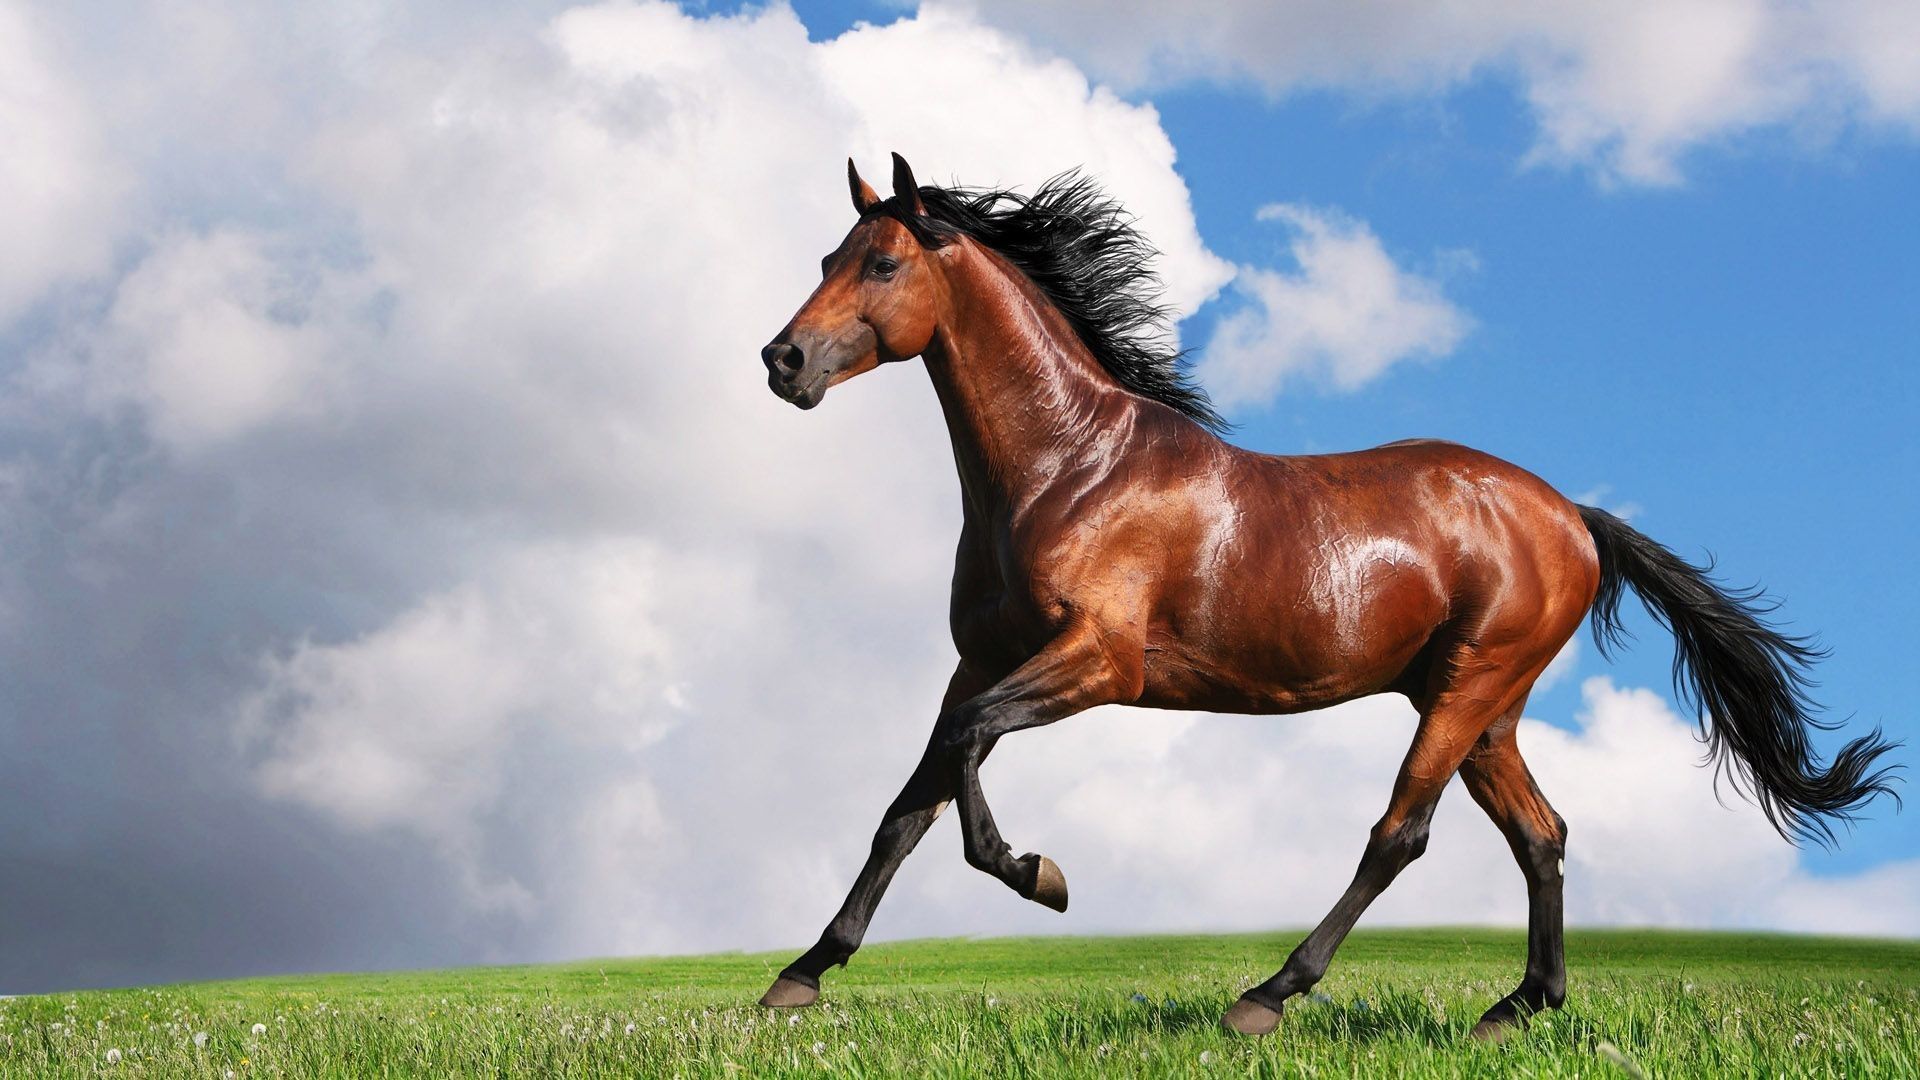 Wallpaper horse, Horse, chestnut for mobile and desktop, section животные,  resolution 2560x1600 - download